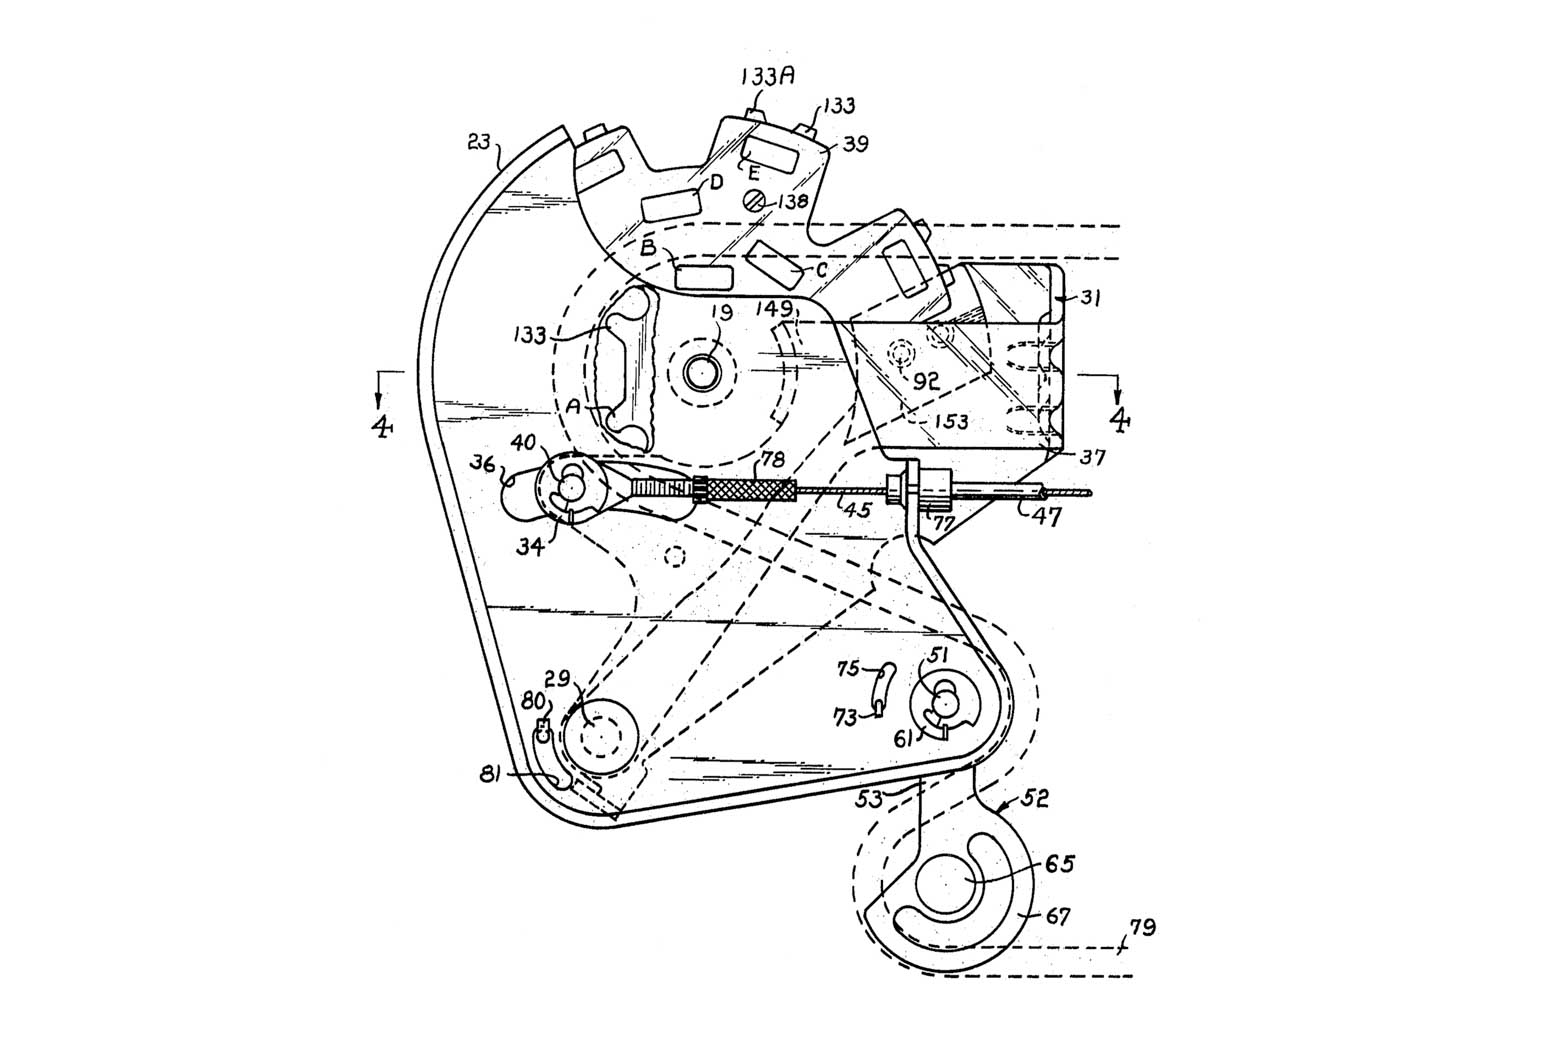 US Patent 3,861,227 - Tokheim main image